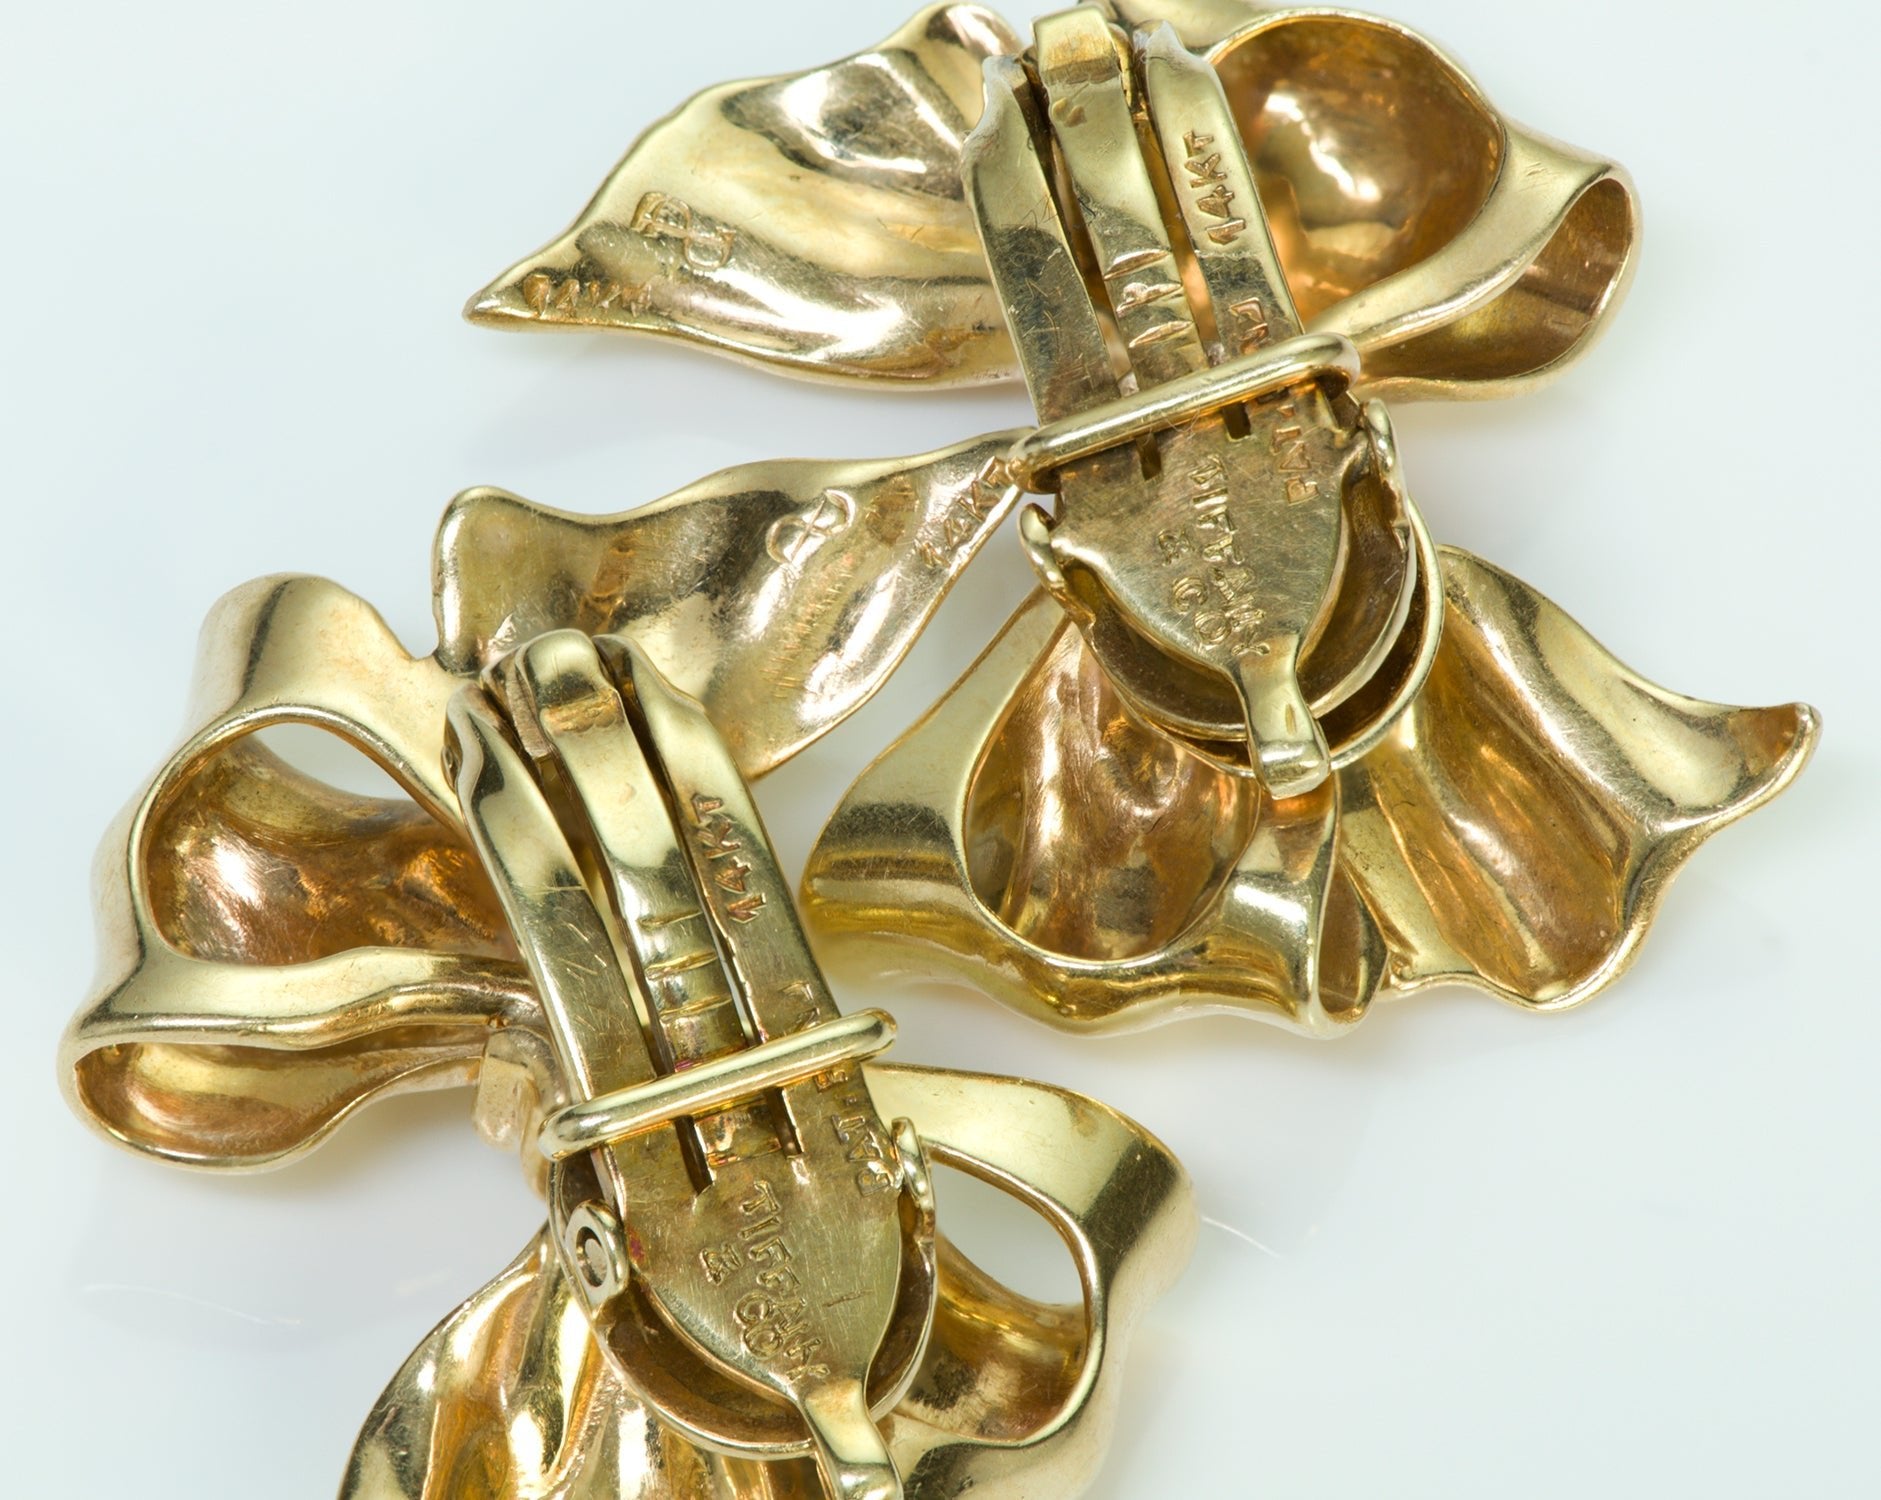 Tiffany & Co. Vintage Gold Bow Earrings